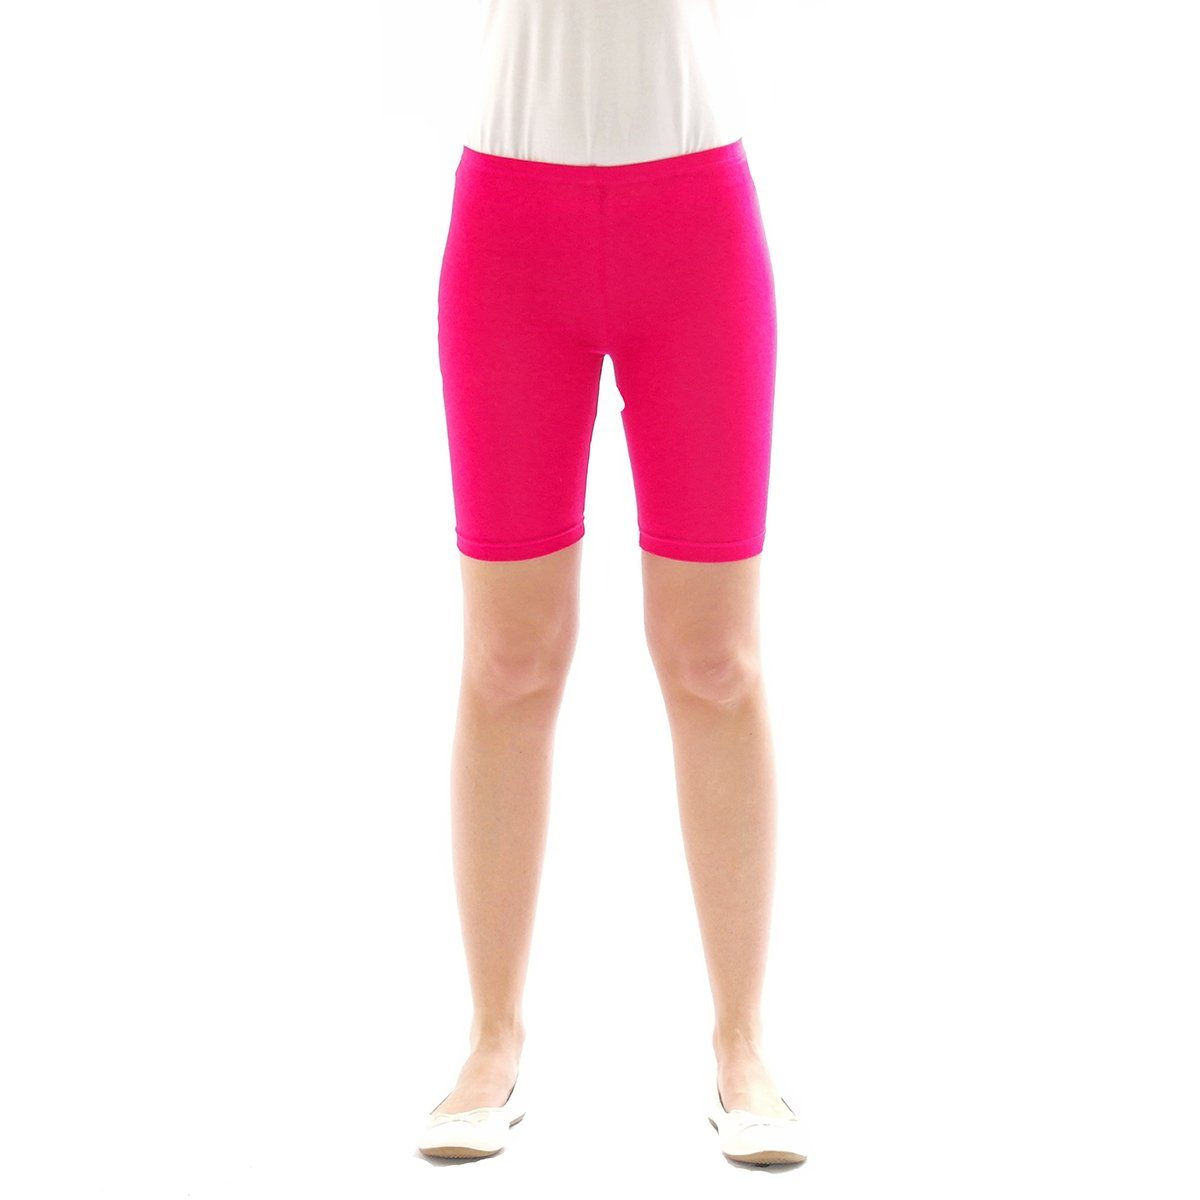 SYS Shorts Kinder Shorts Sport Baumwolle Pants Mädchen pink 1/2 Jungen